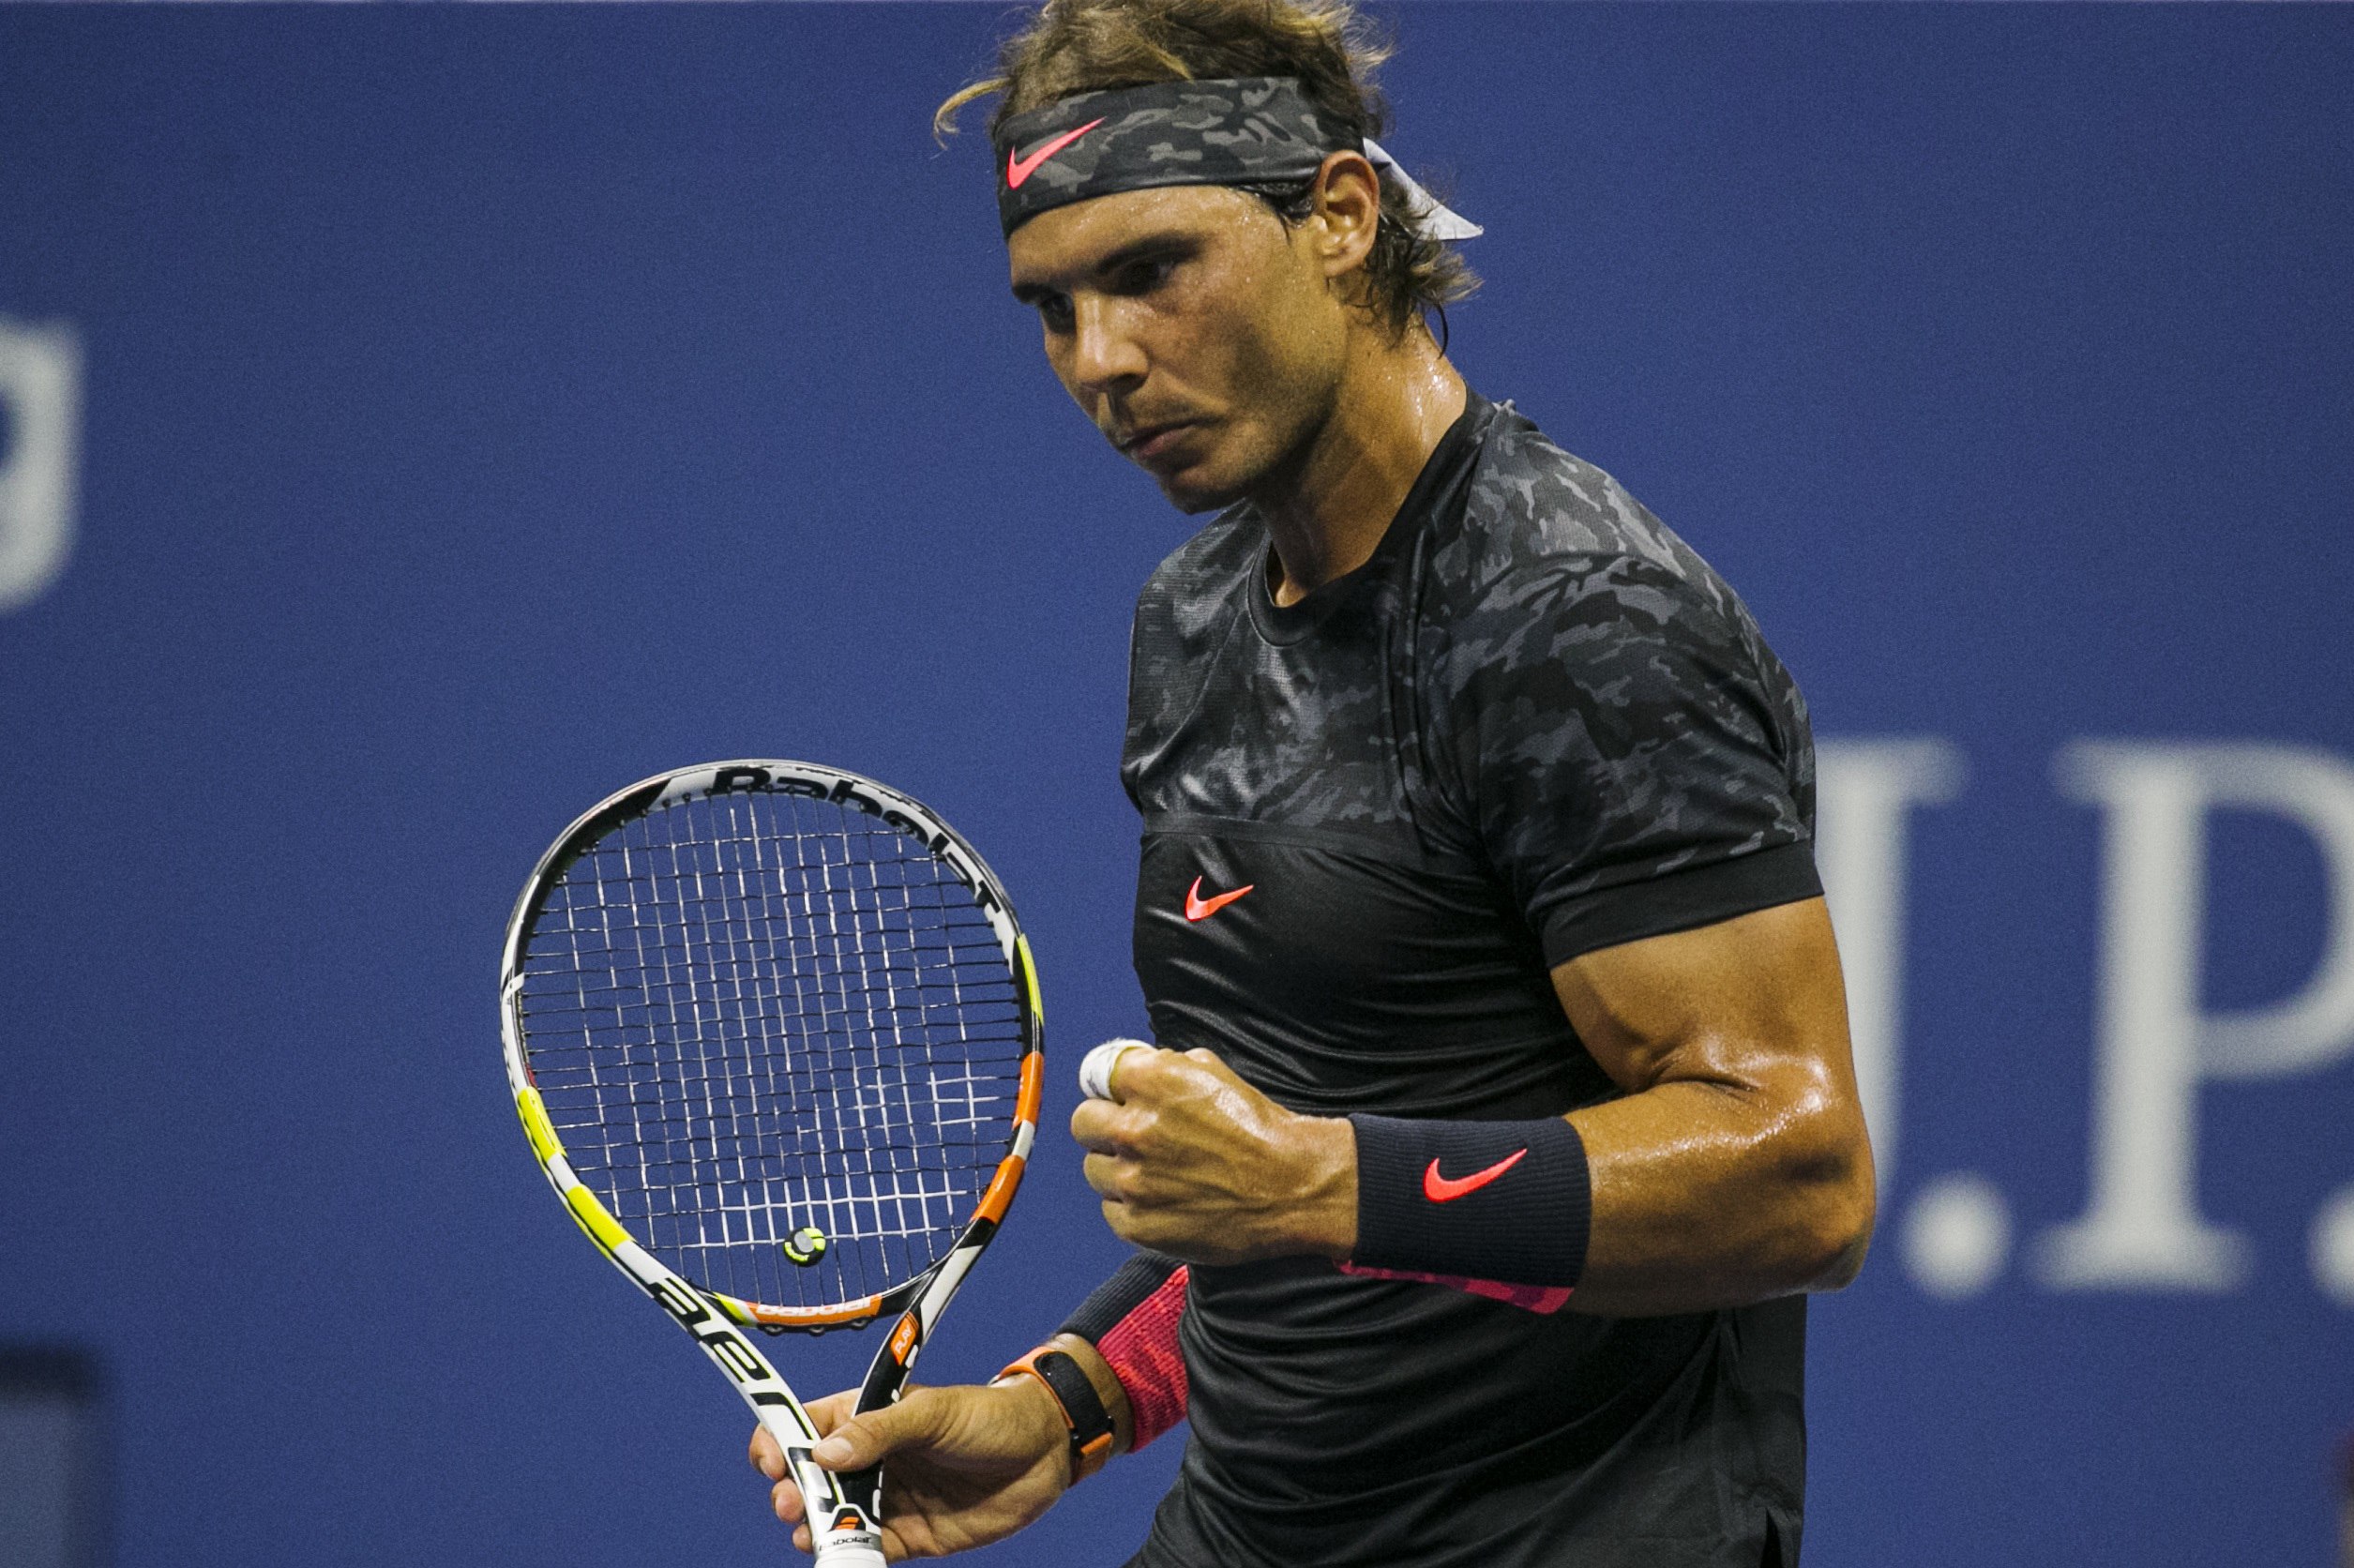 PHOTOS: Rafael Nadal beats Borna Coric to move into US Open second round – Rafael ...